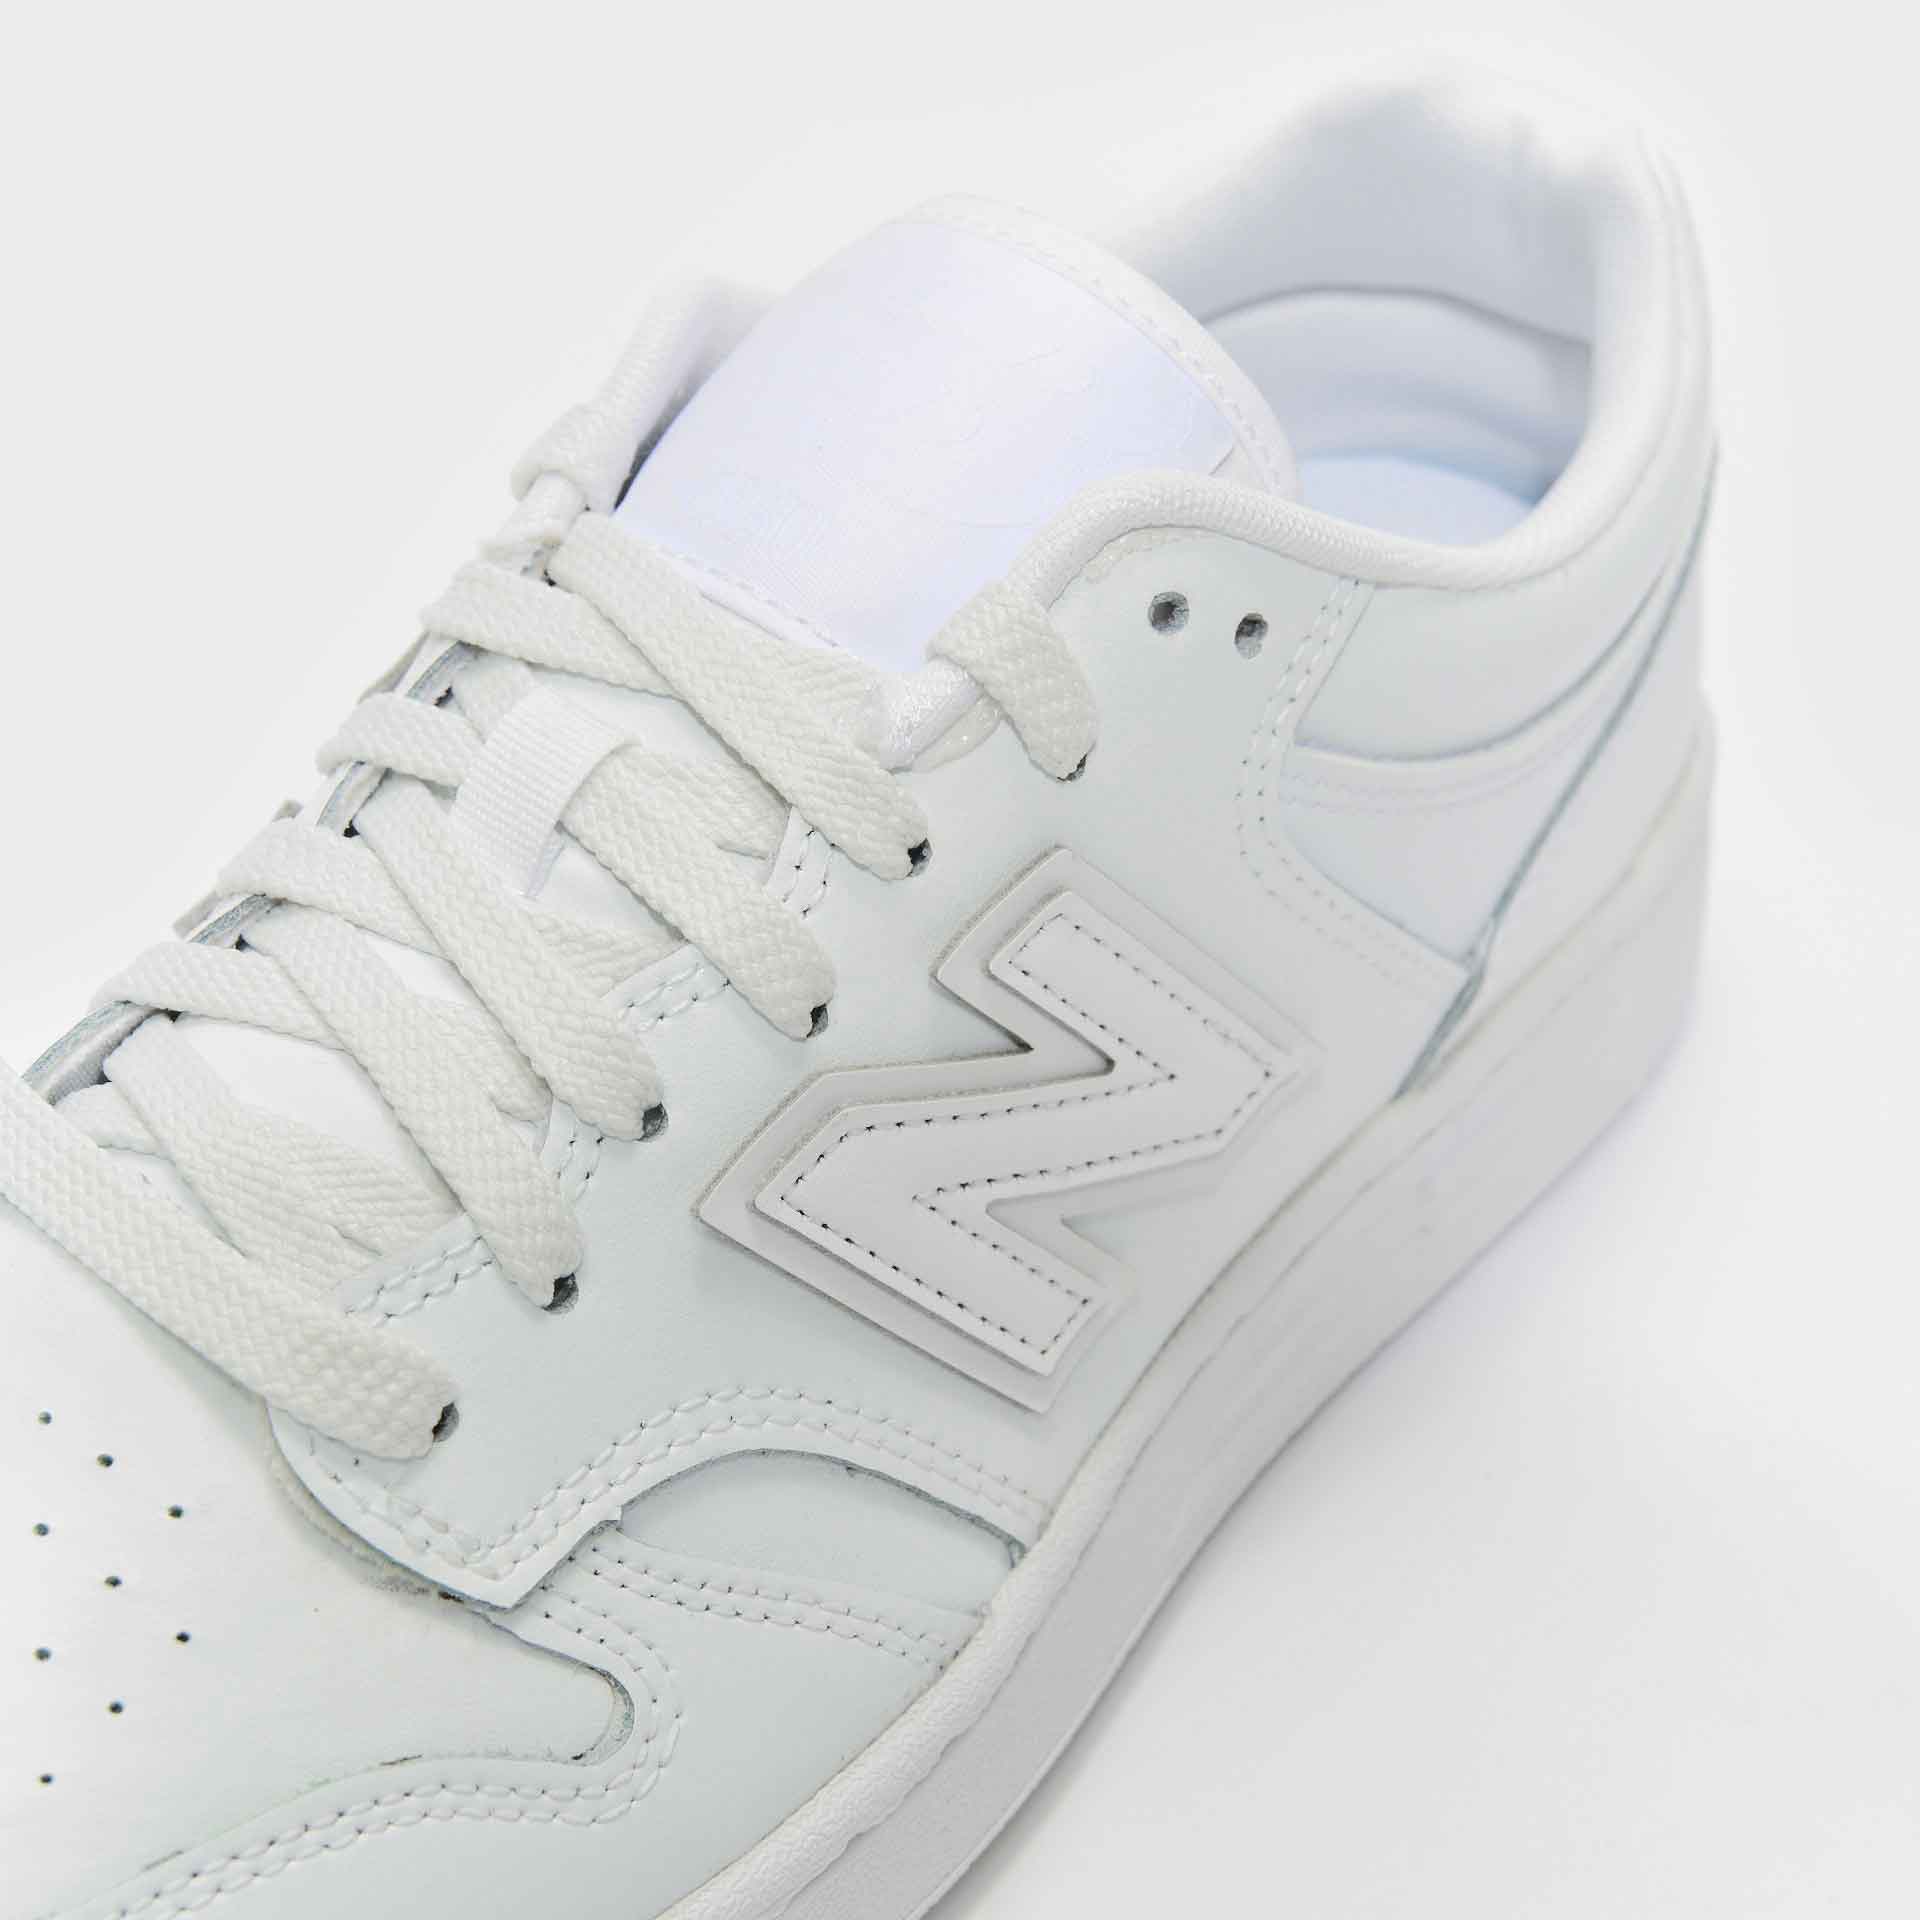 New Balance BB480 Sneaker White/White